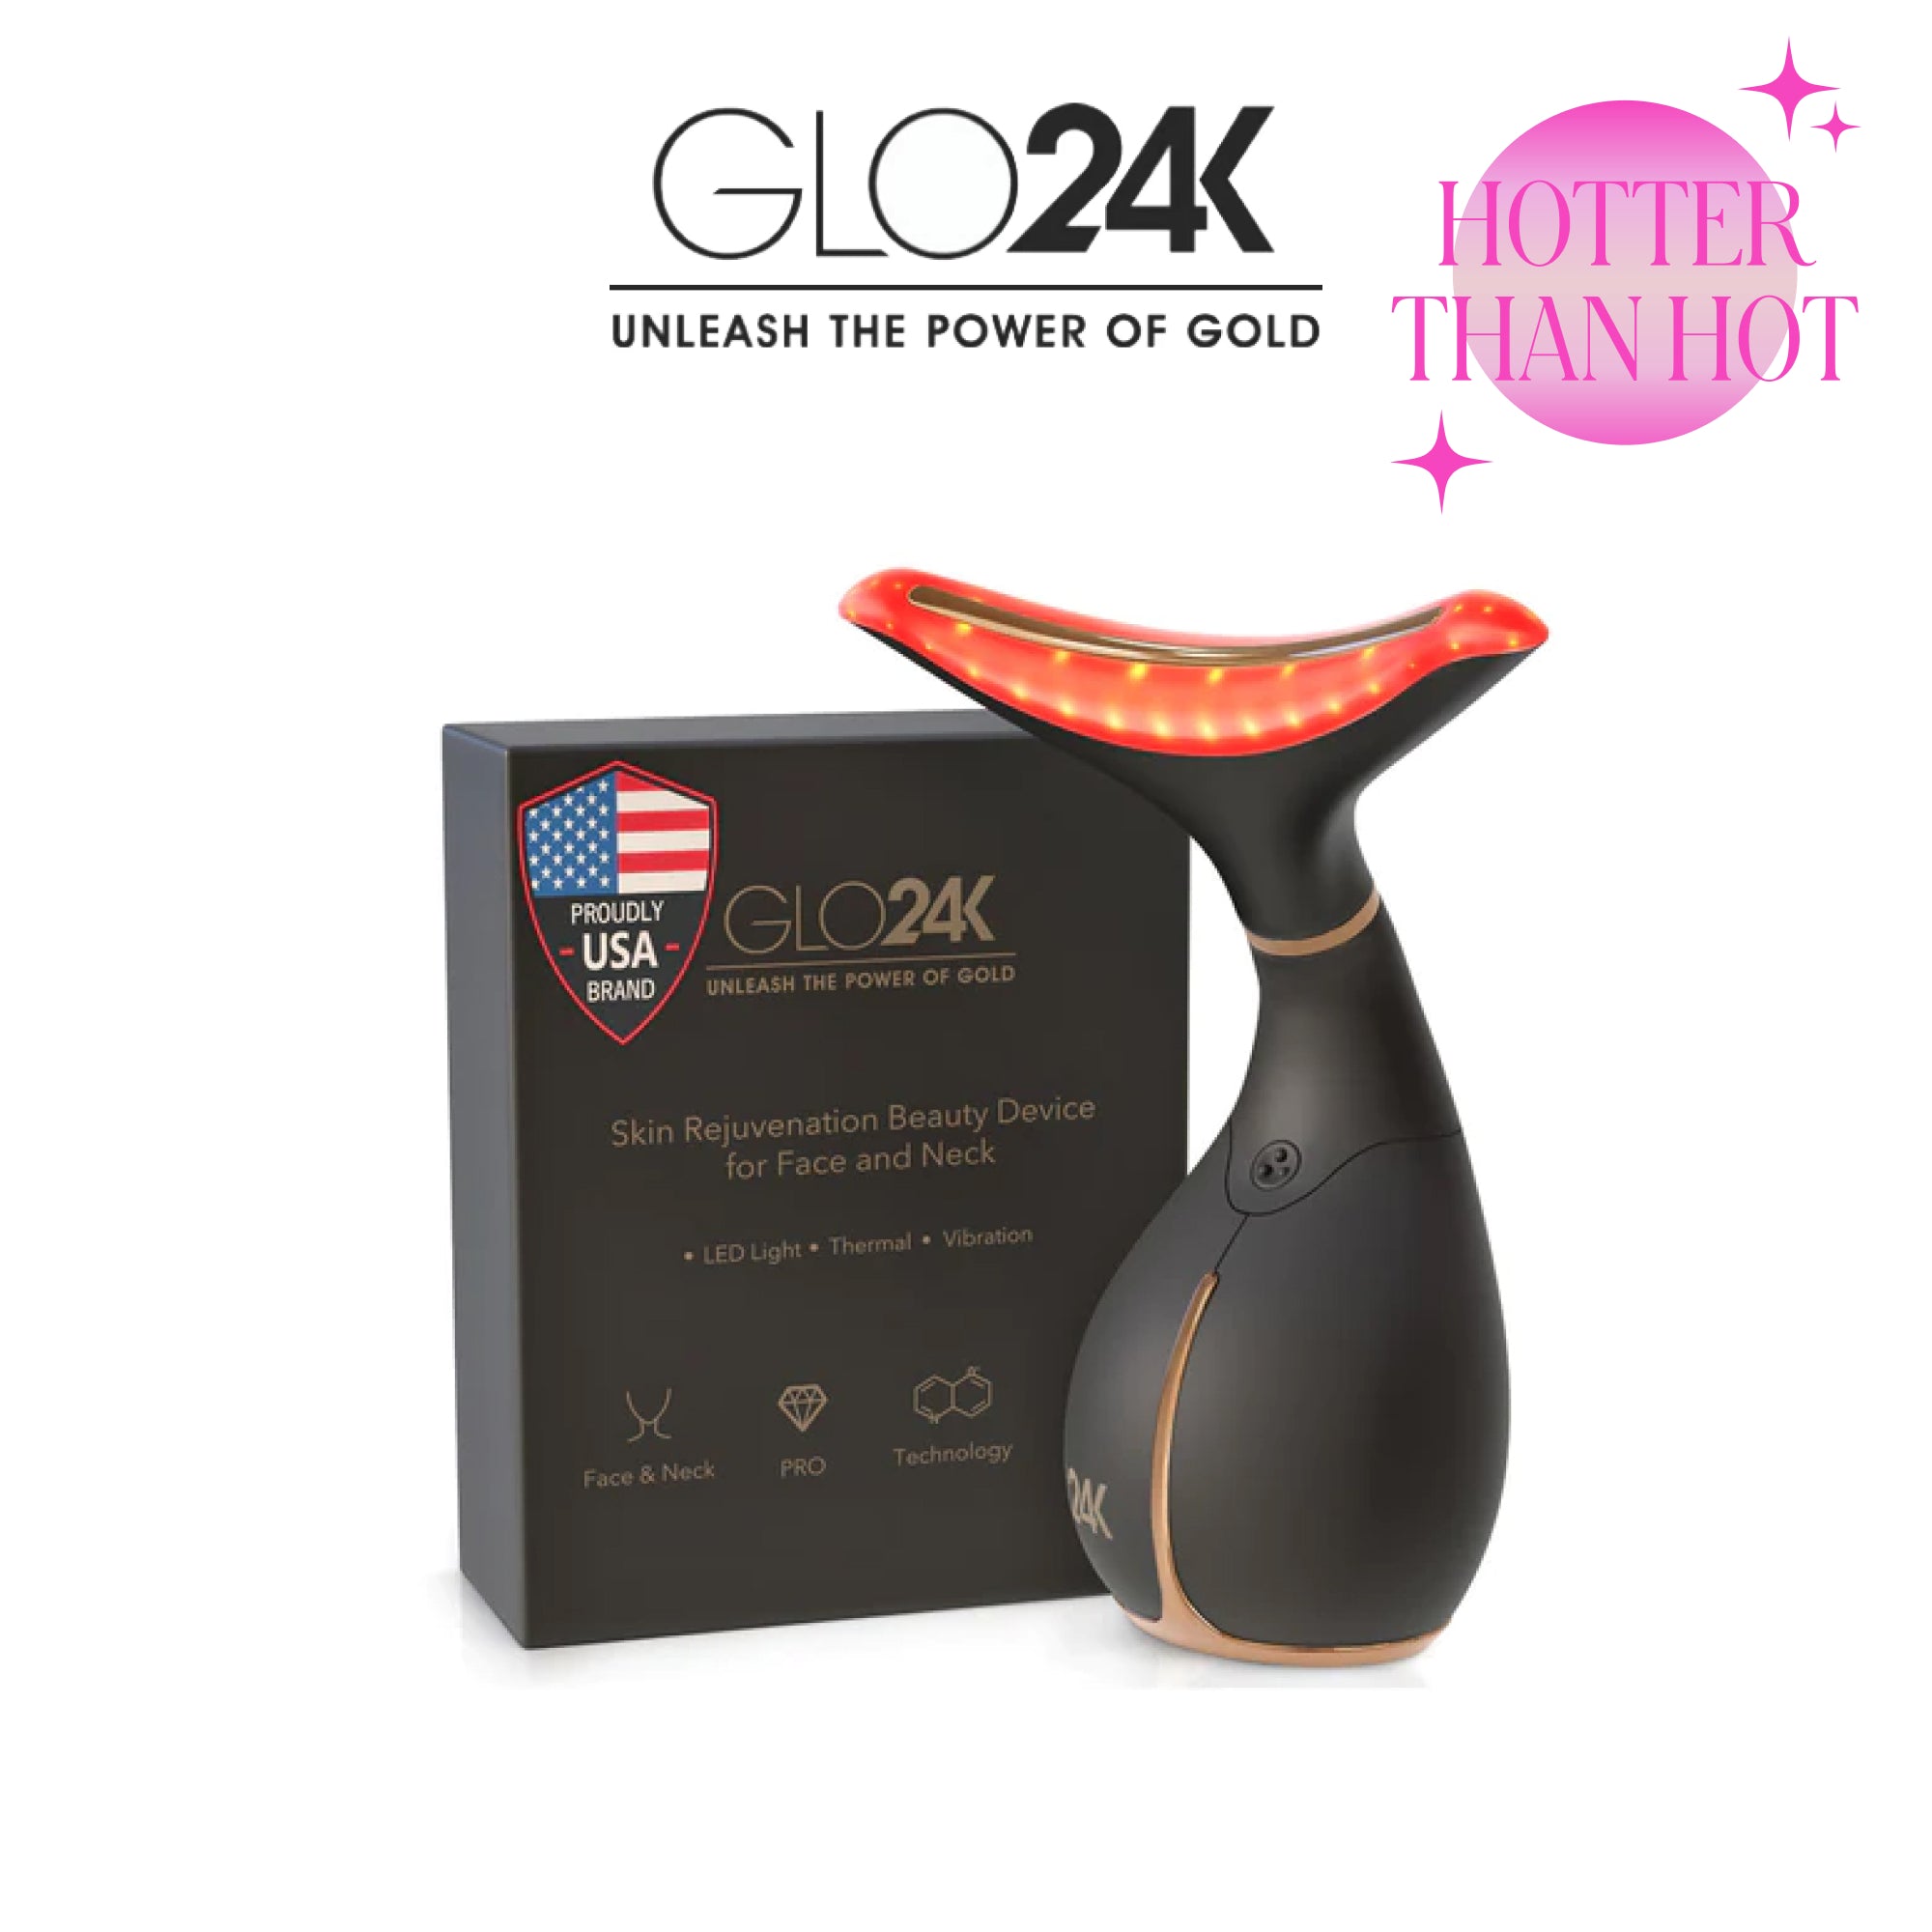 Glo24k - Skin Rejuvenation Beauty Device for Face and Neck